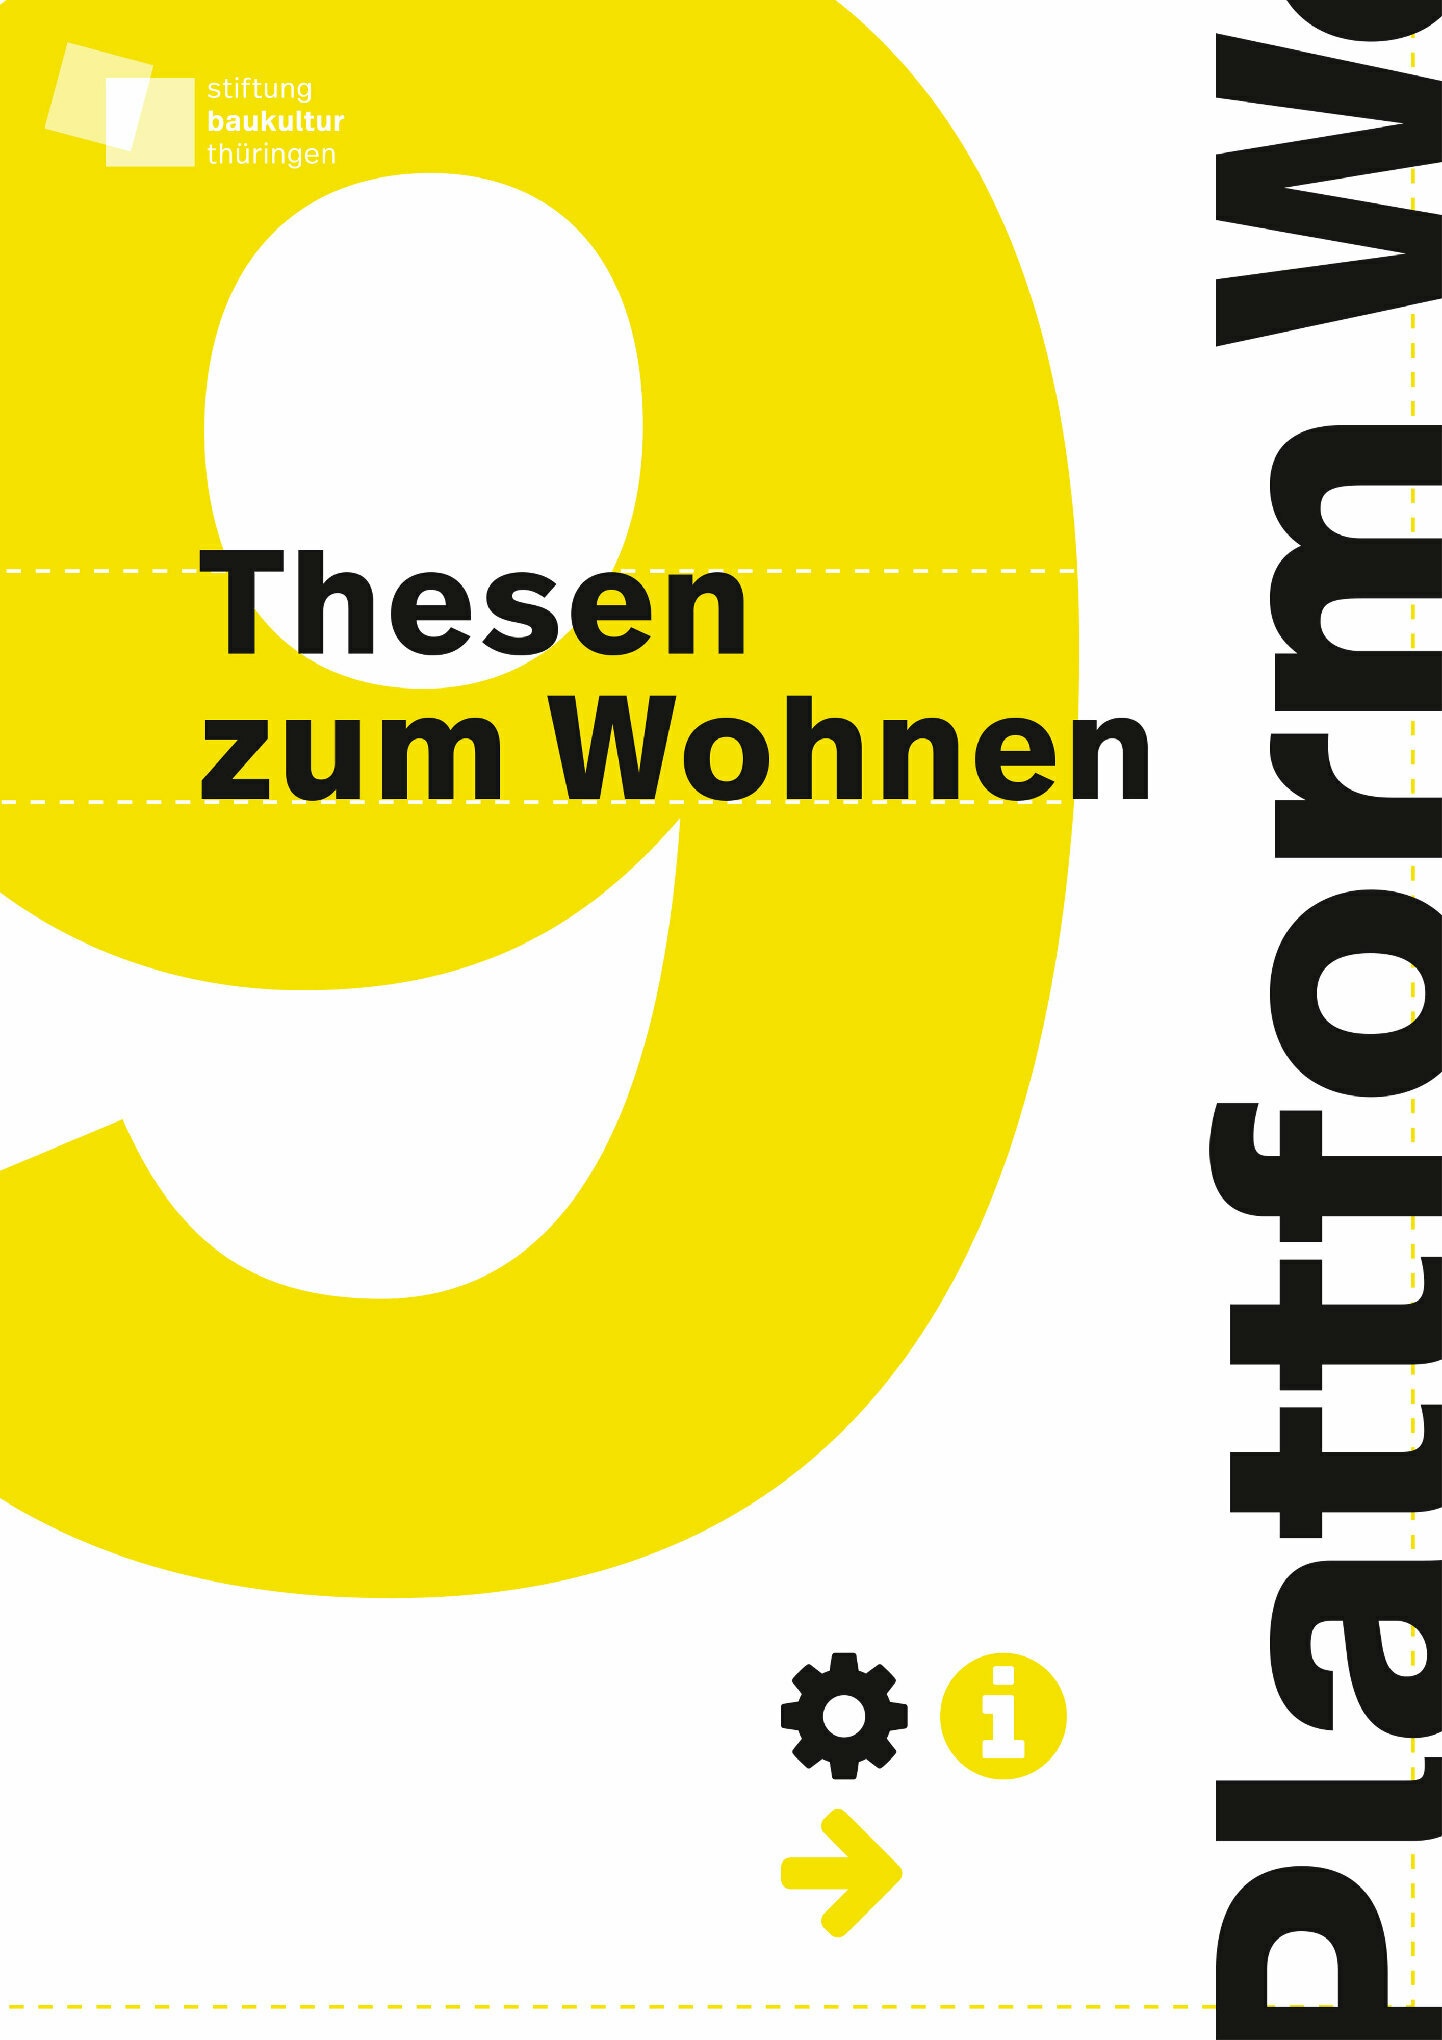 Cover, Neun Thesen zum Wohnen, Bild: Anja Waldmann, Weimar